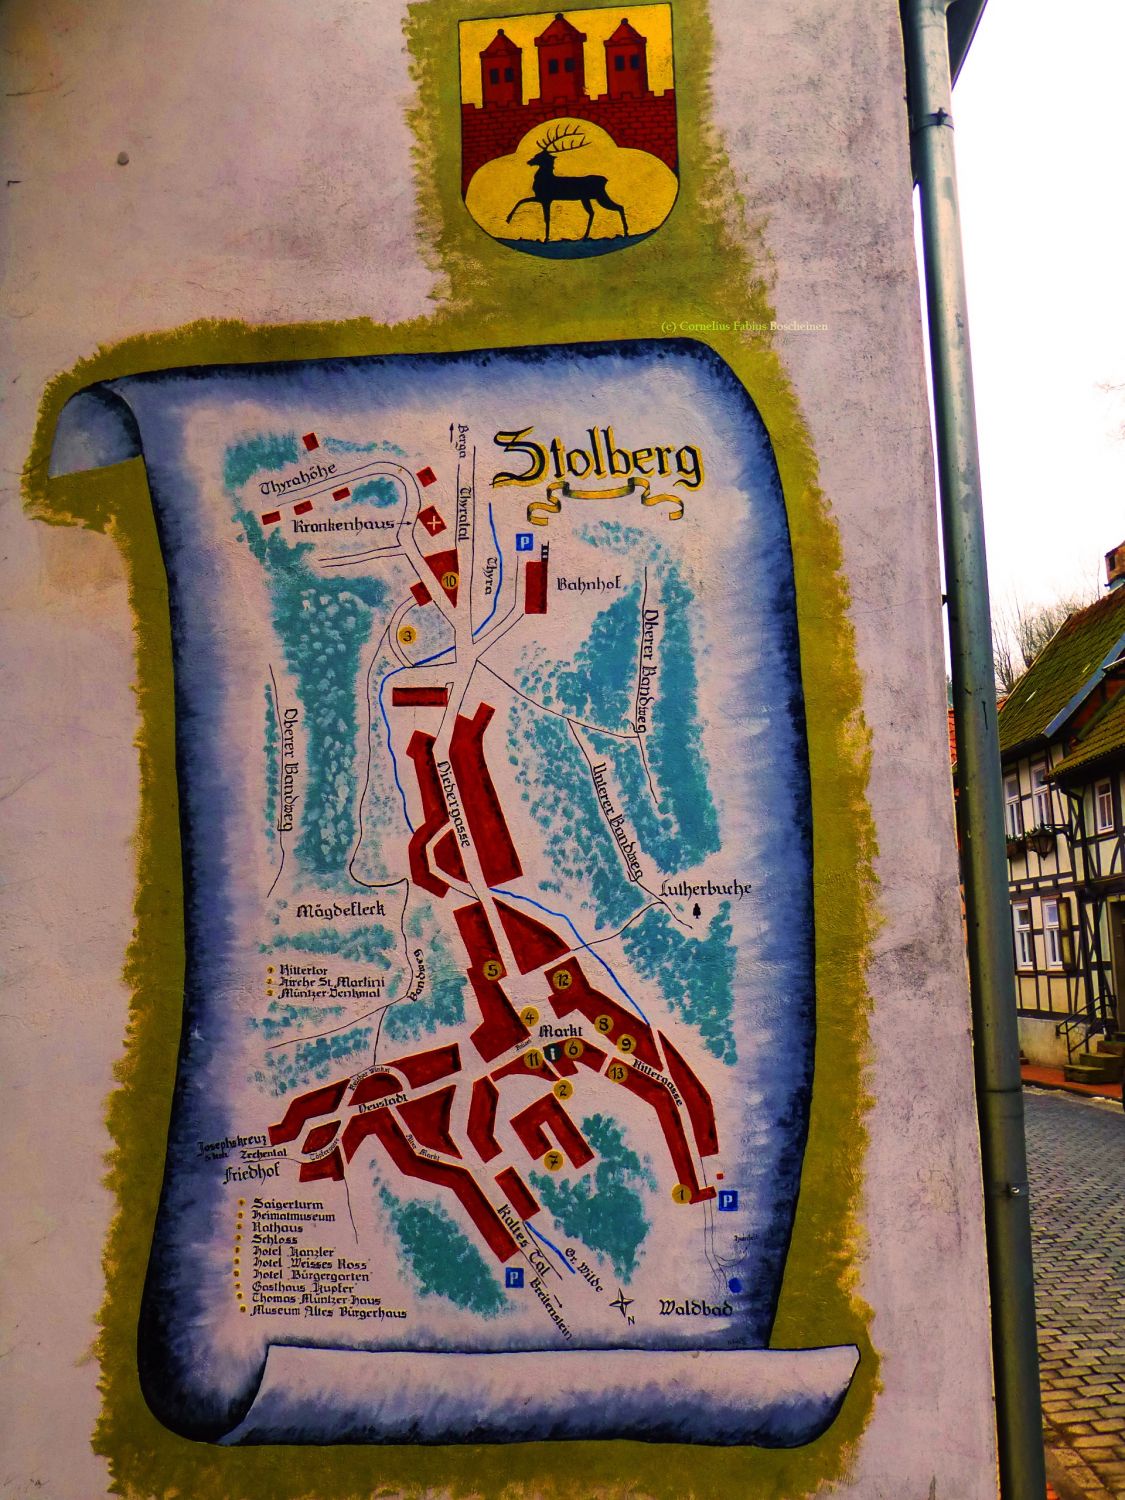 "historische" Stadtkernmalerei als Willkommensgruß in Stolberg/Sü